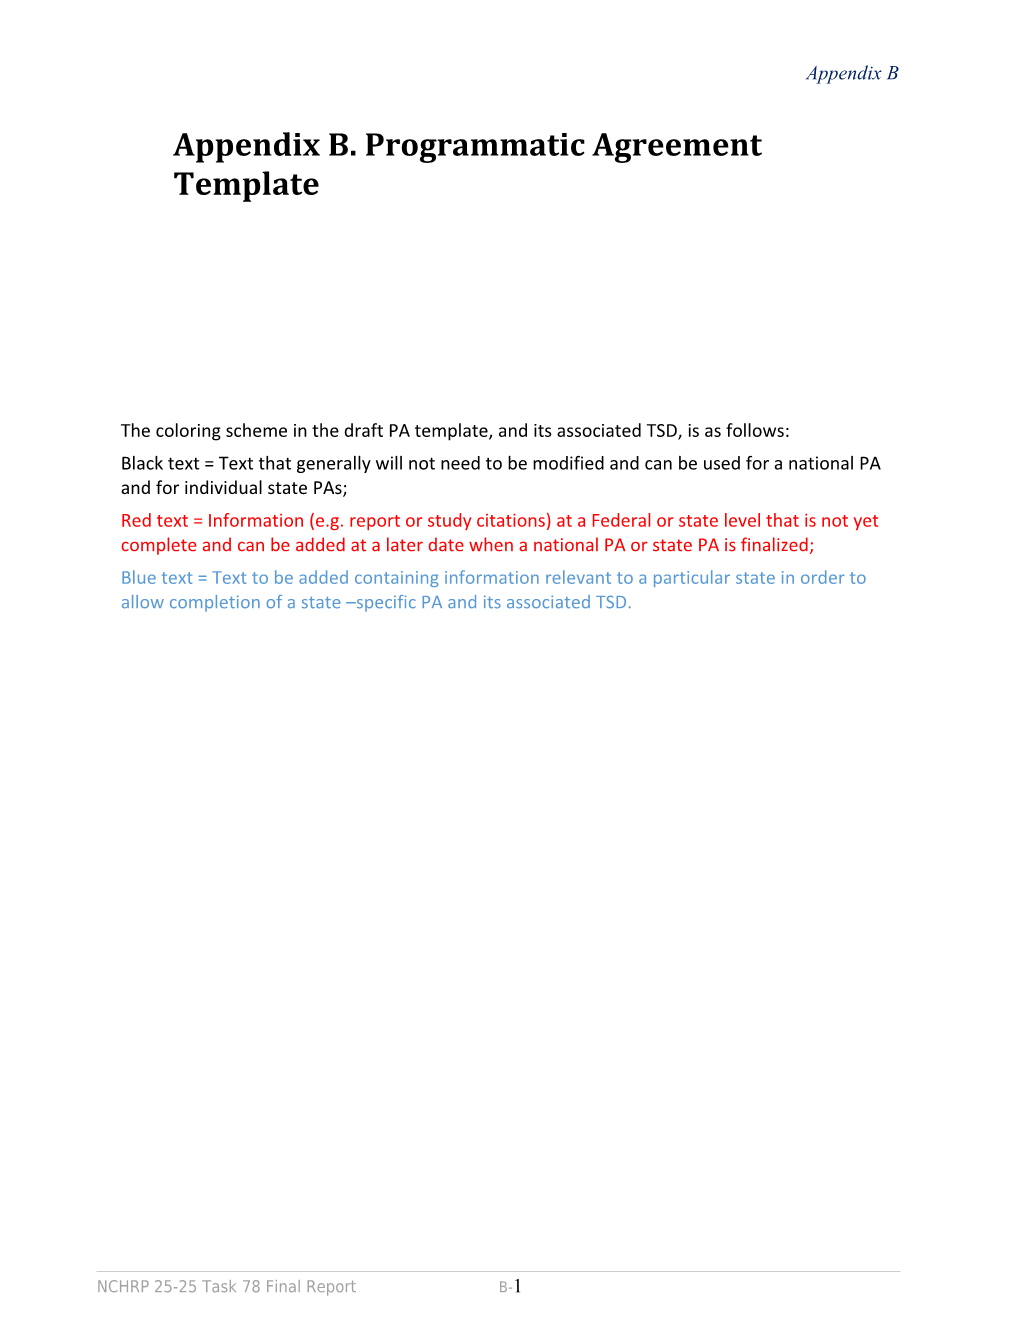 Appendix B. Programmatic Agreement Template